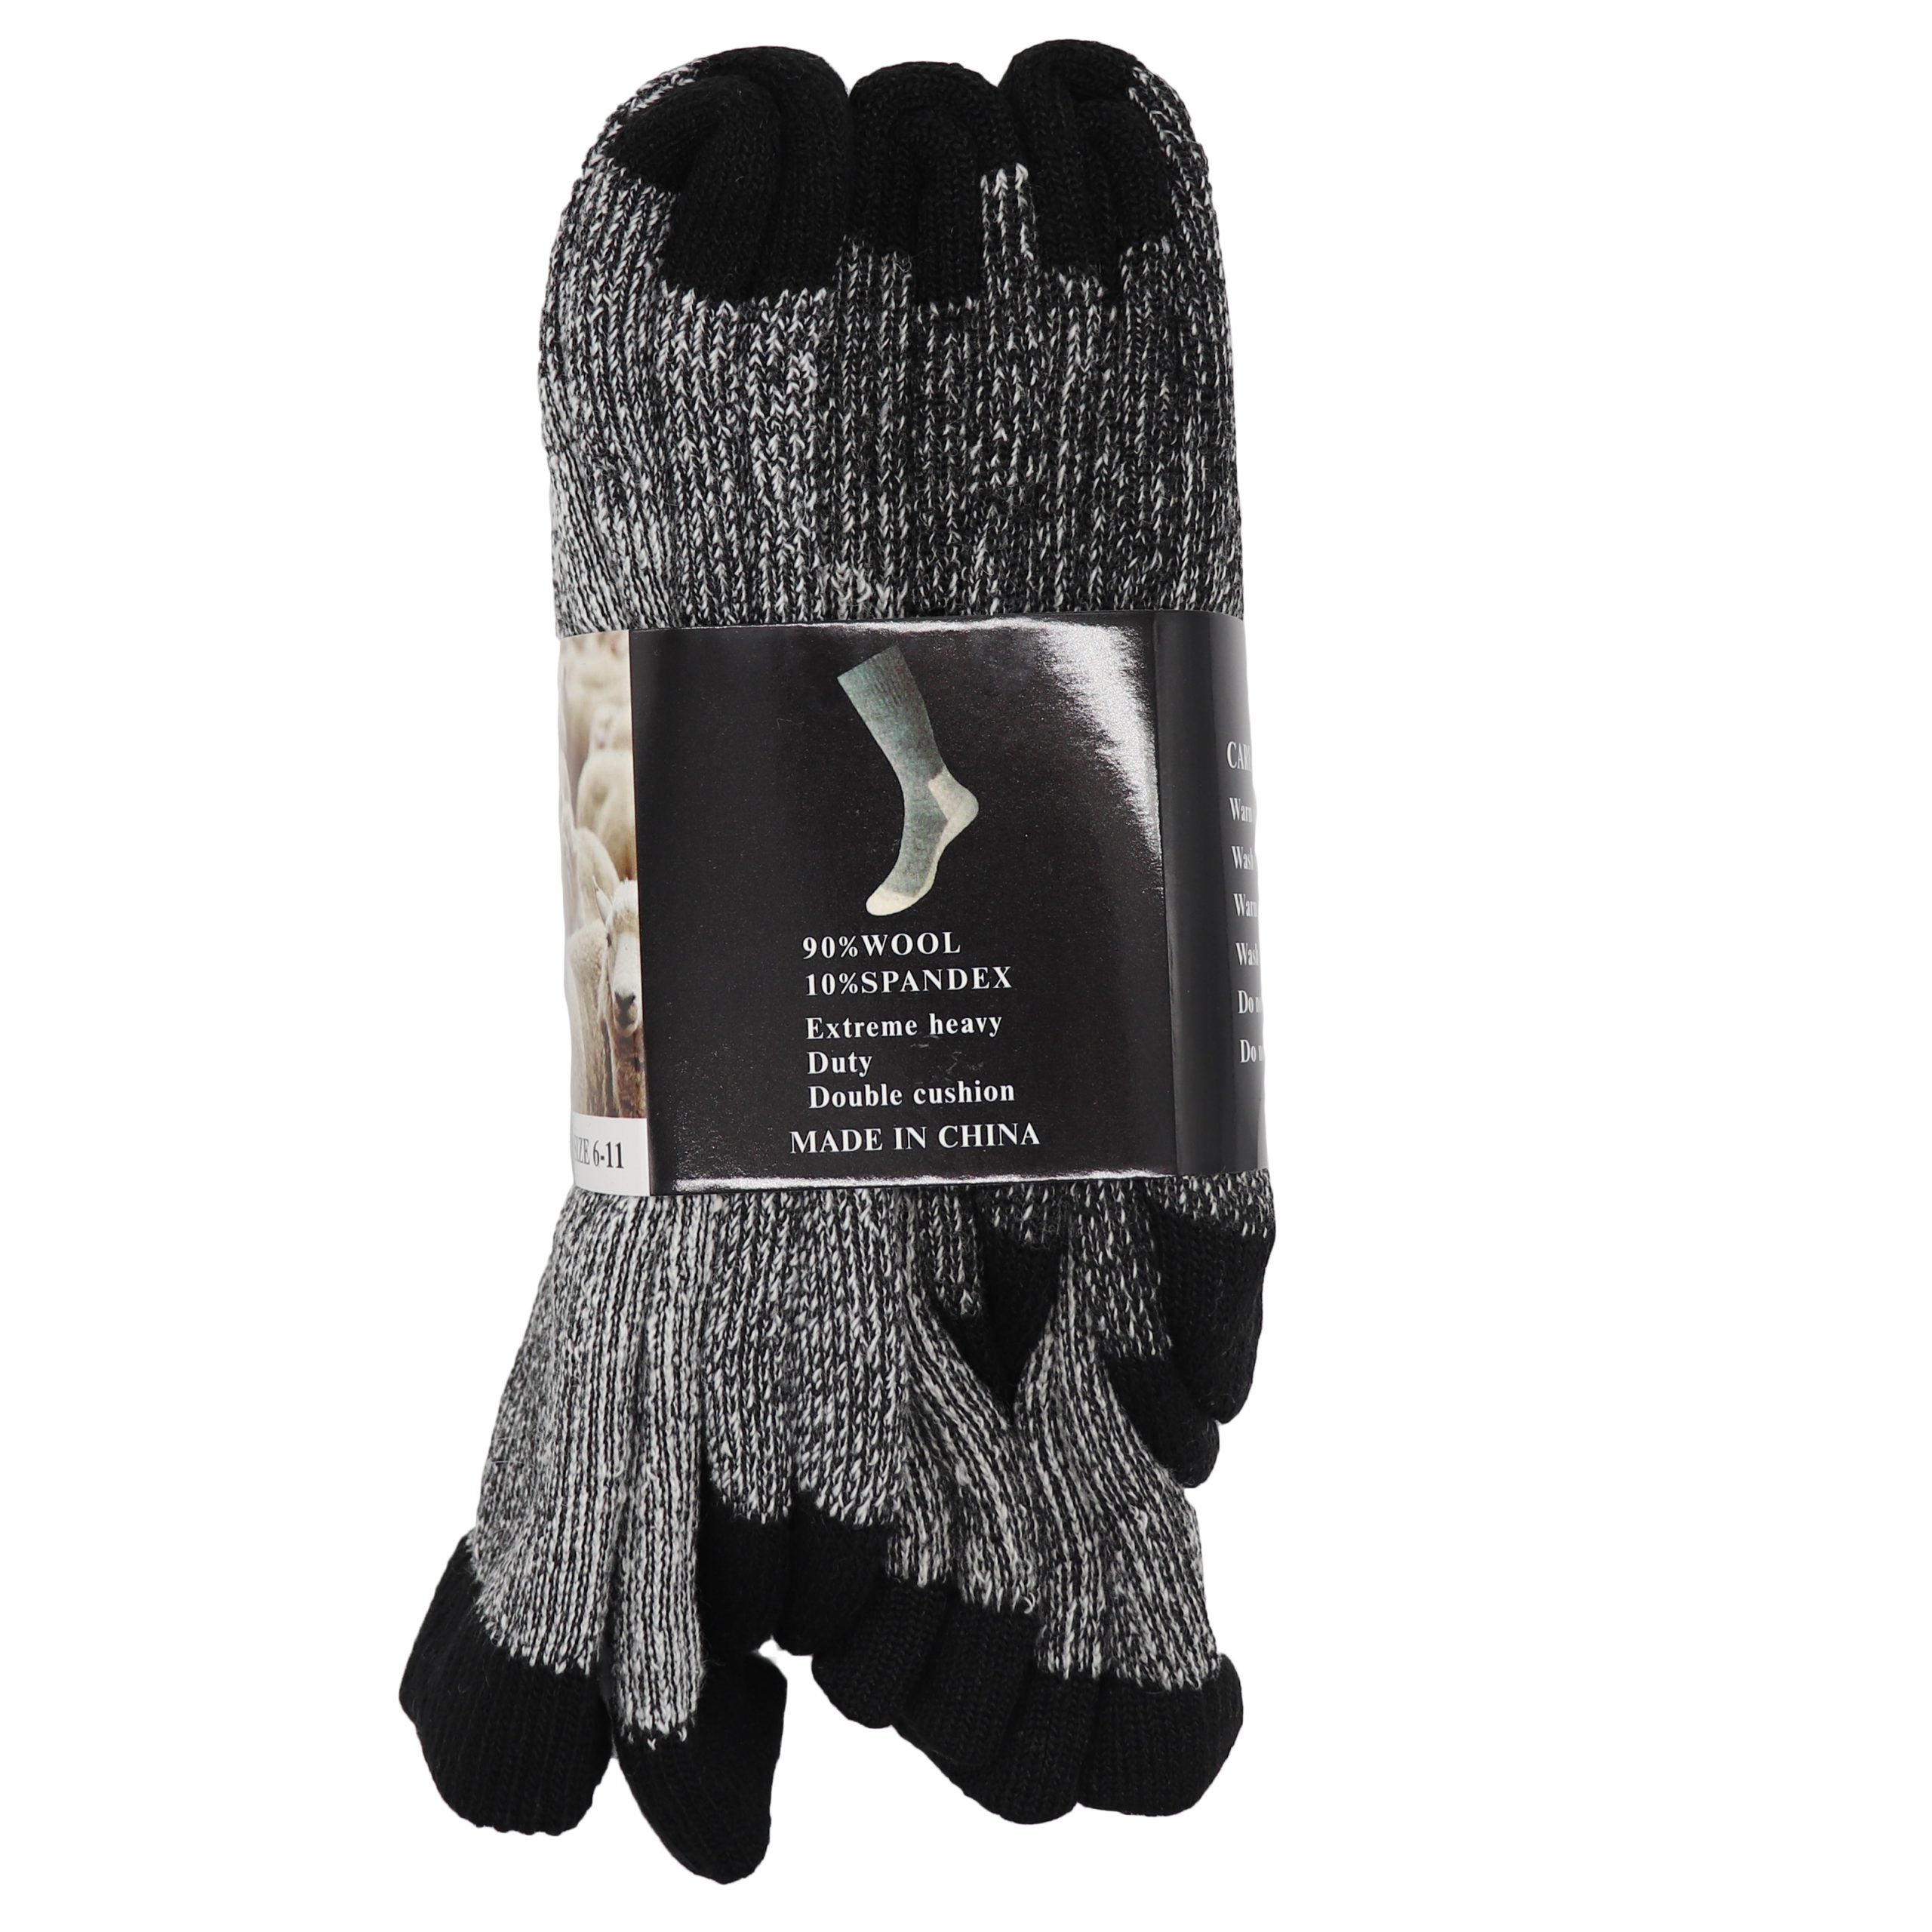 6 Pairs Merino Wool Thick Double Cushion Heavy Duty Socks Tradie Warm Thermal, 6-11